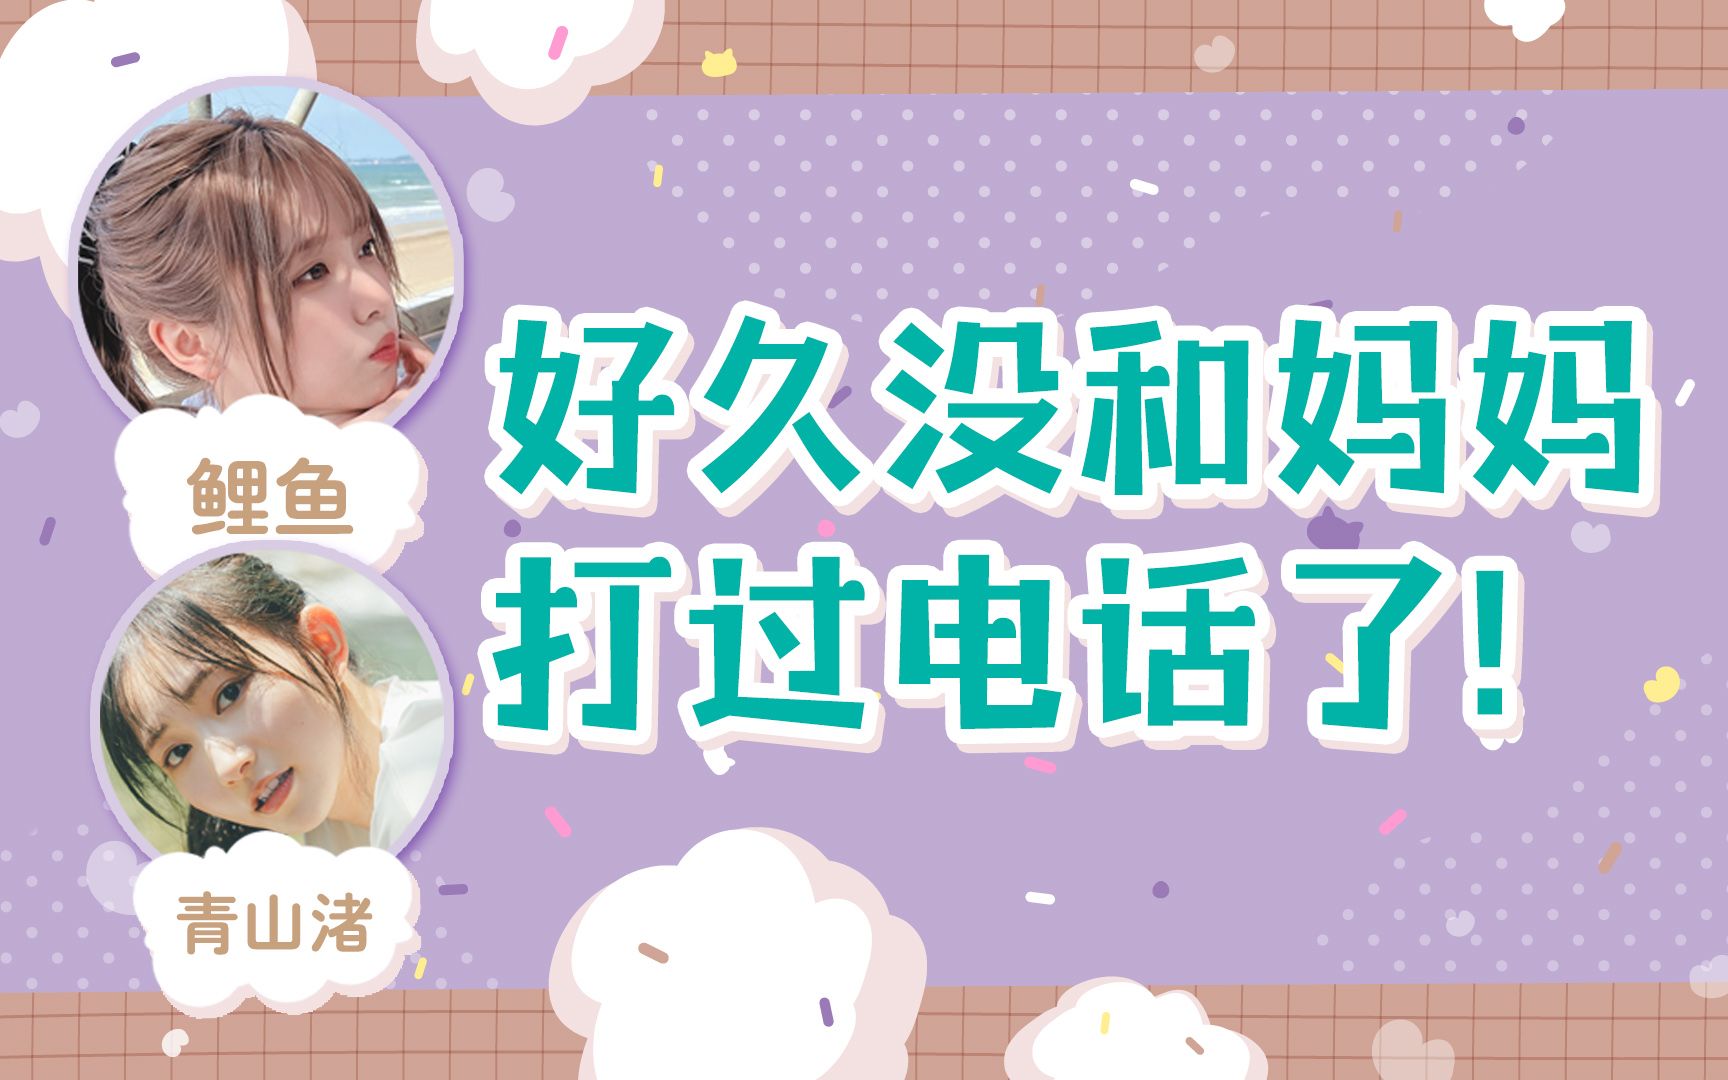 【Liyuu】好久没和妈妈打电话的鲤鱼姐 & 水渚鱼相约开饺子Party